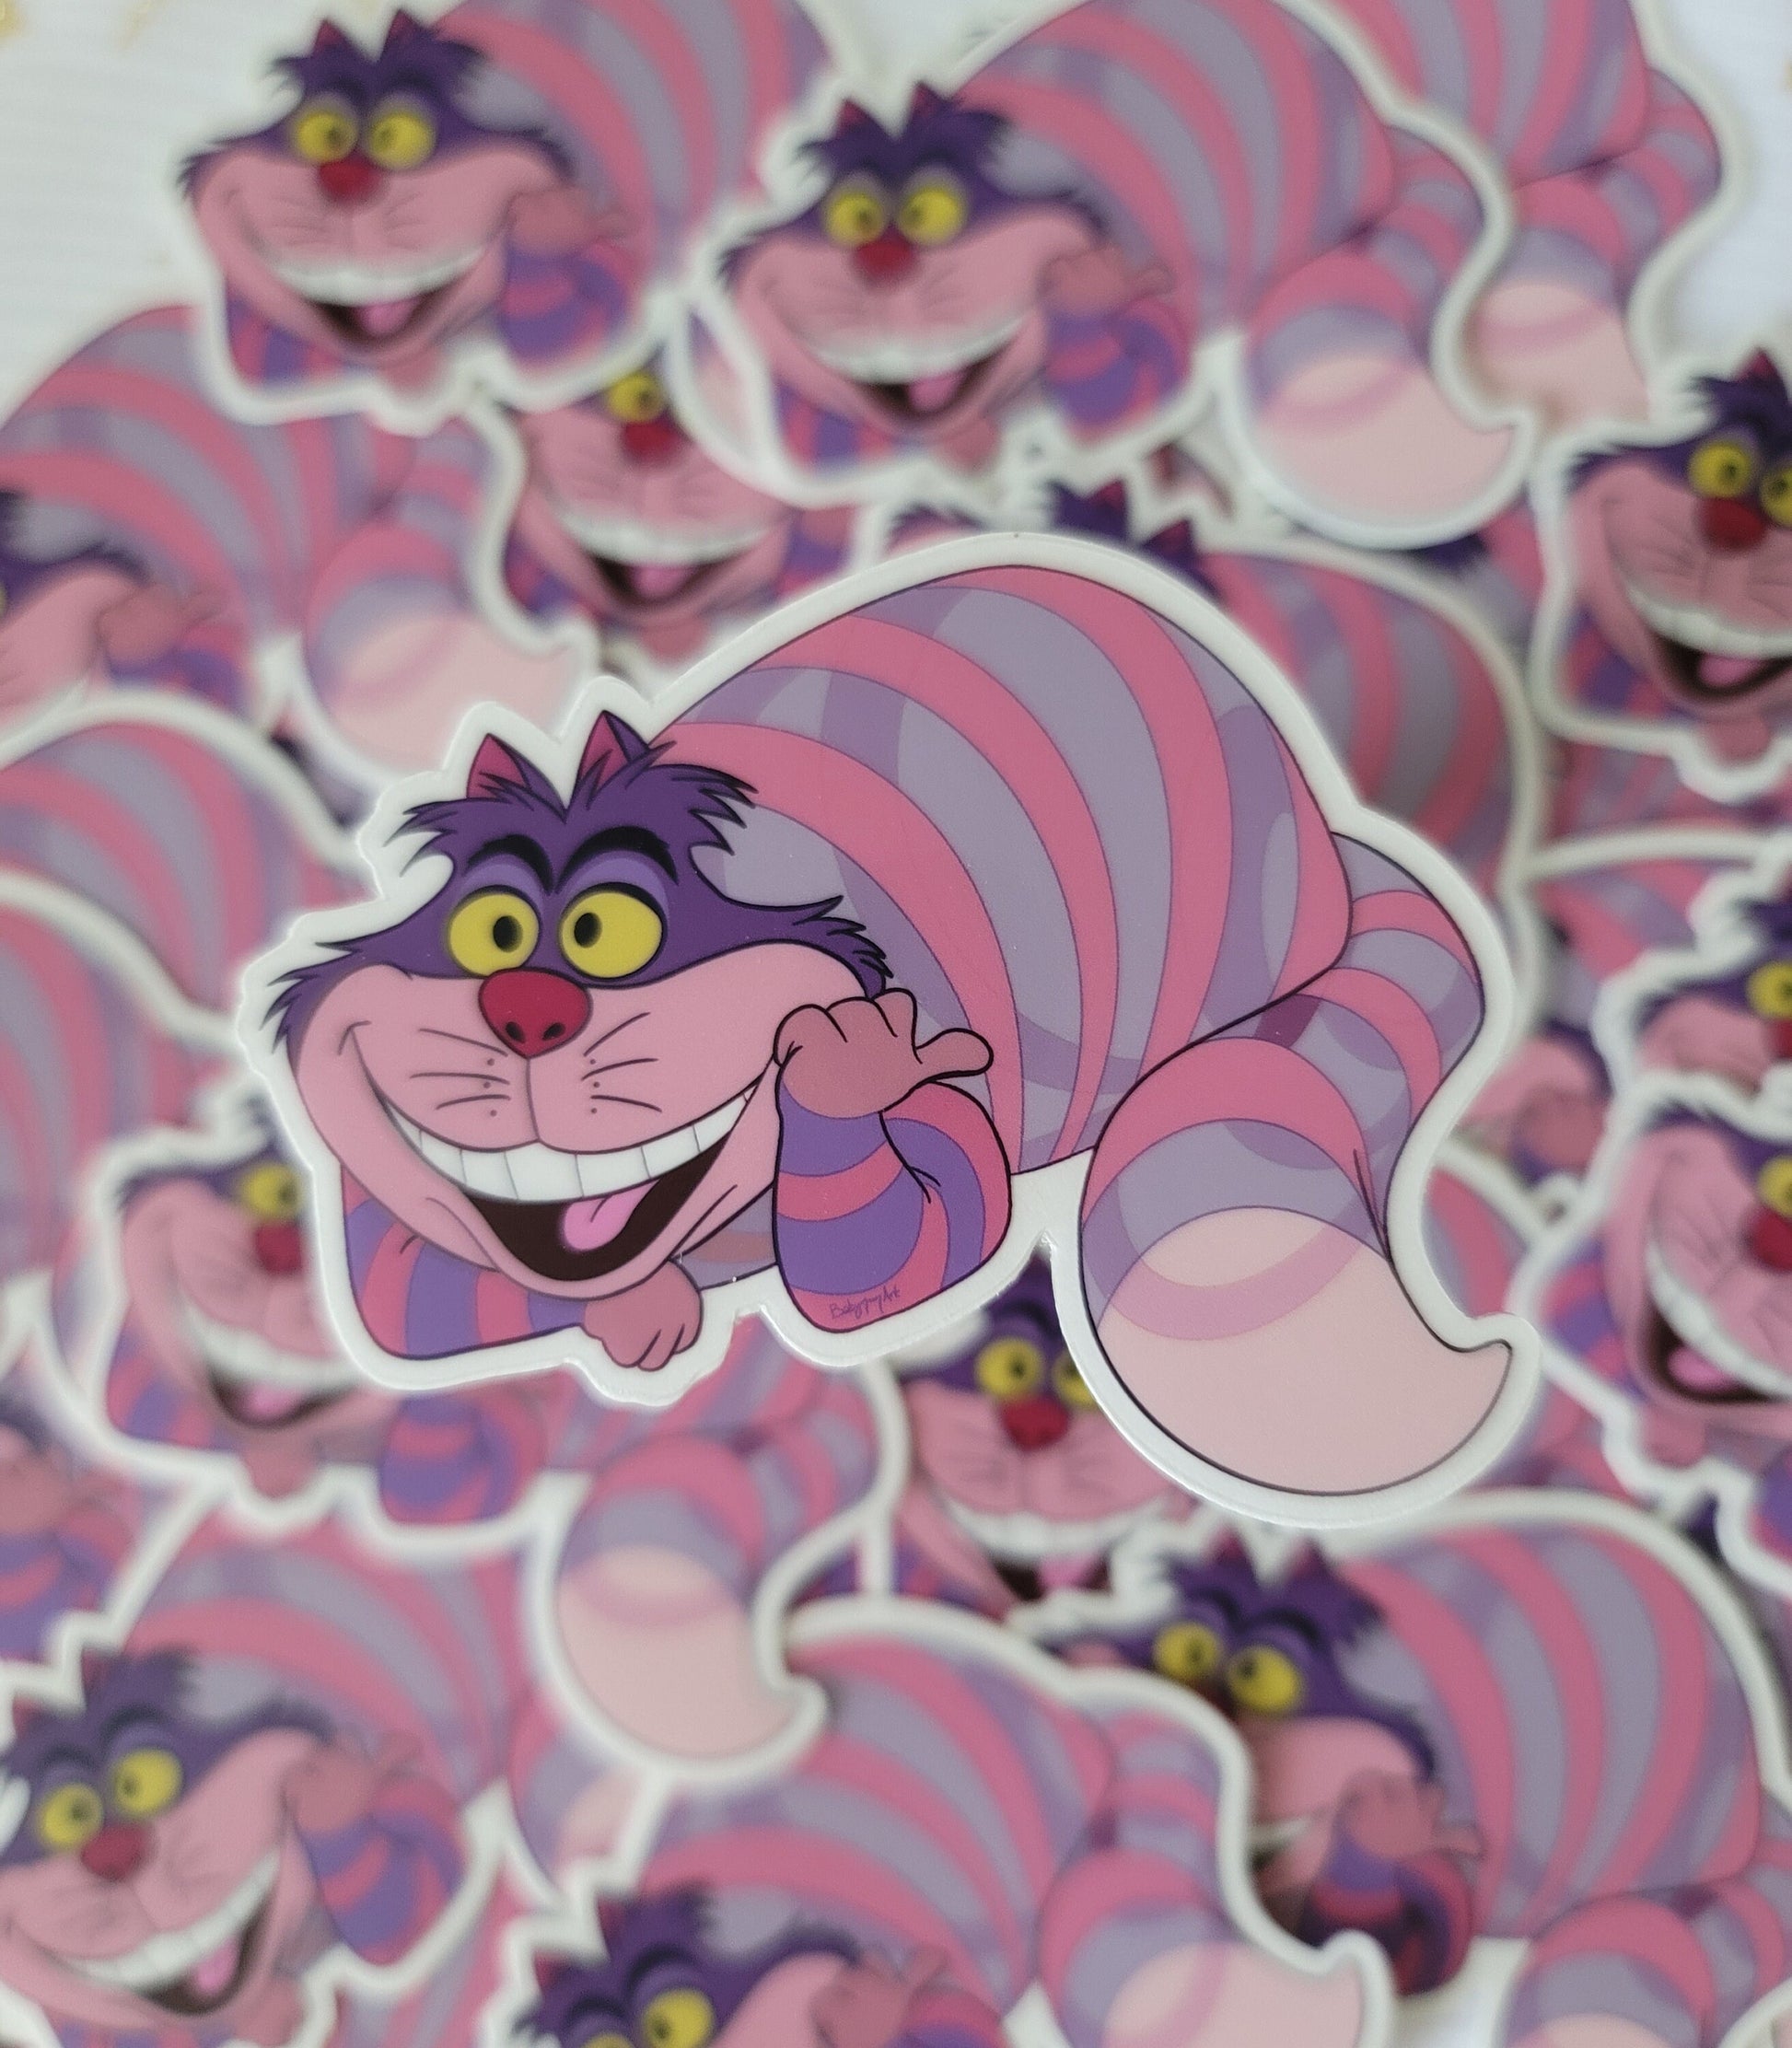 10 Pcs Disney Alice In Wonderland, Cheshire Cat Stickers